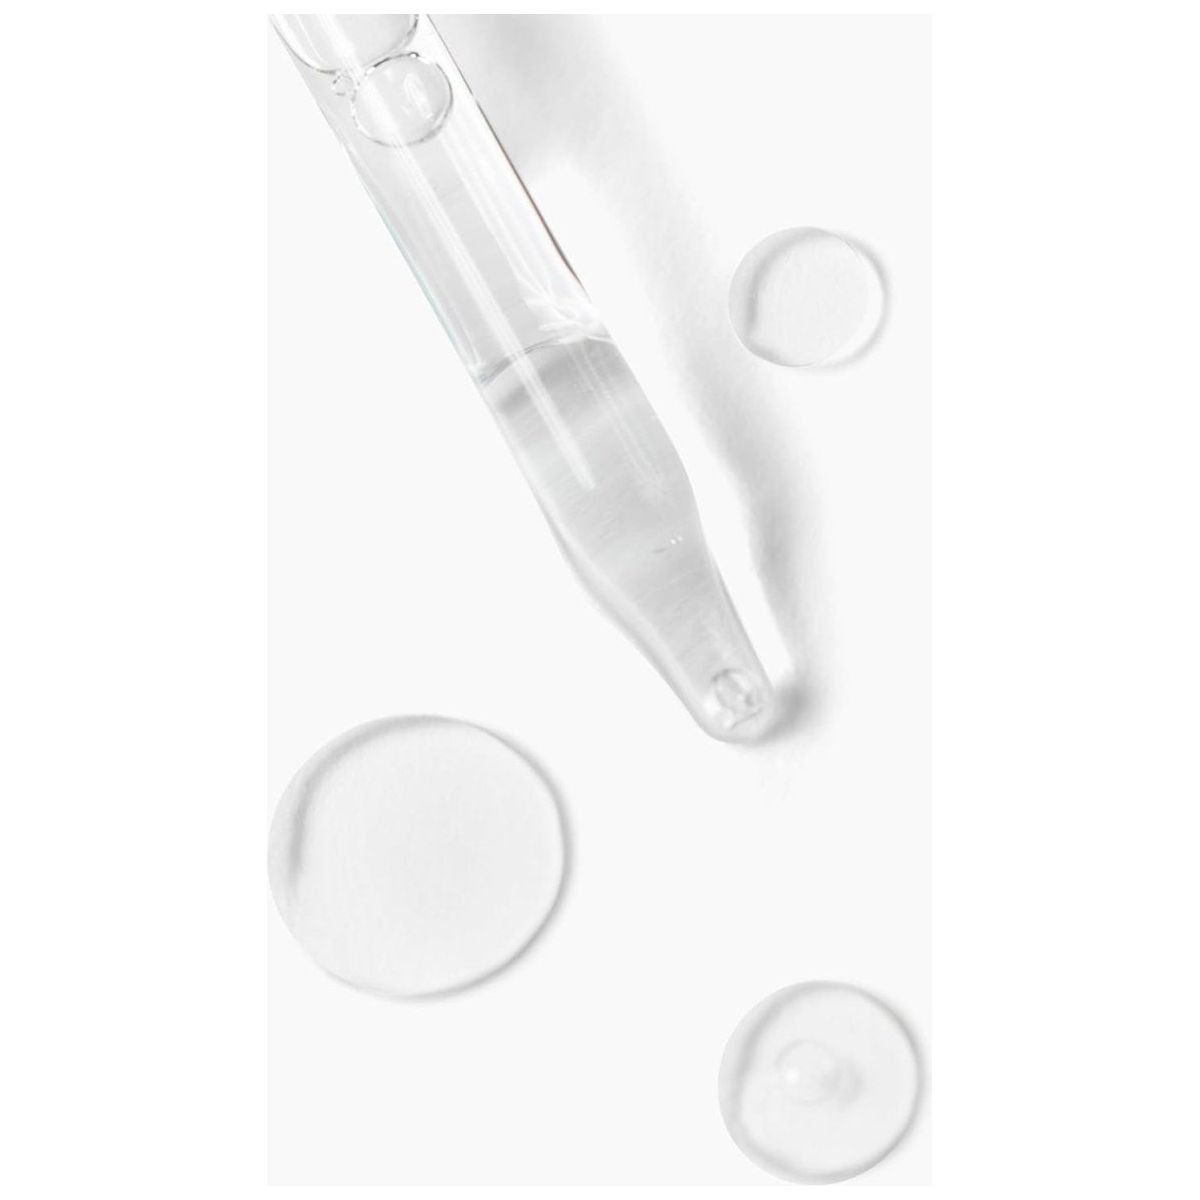 DRMTLGY Needle-less Serum - 30ml - Glam Global UK